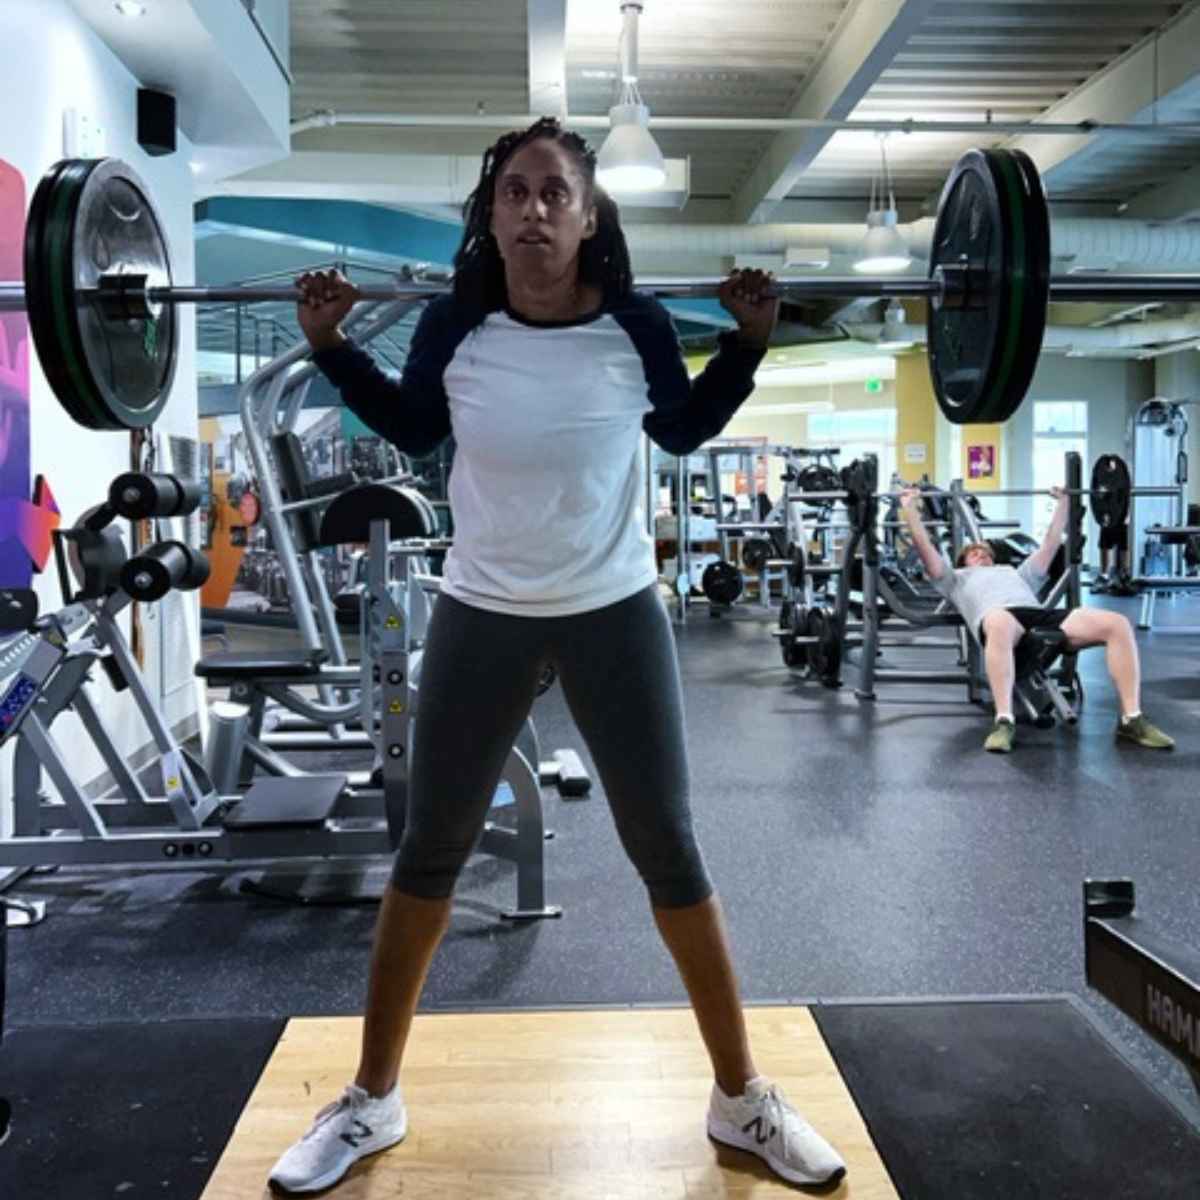 Lower body exercises: lunge vs squat